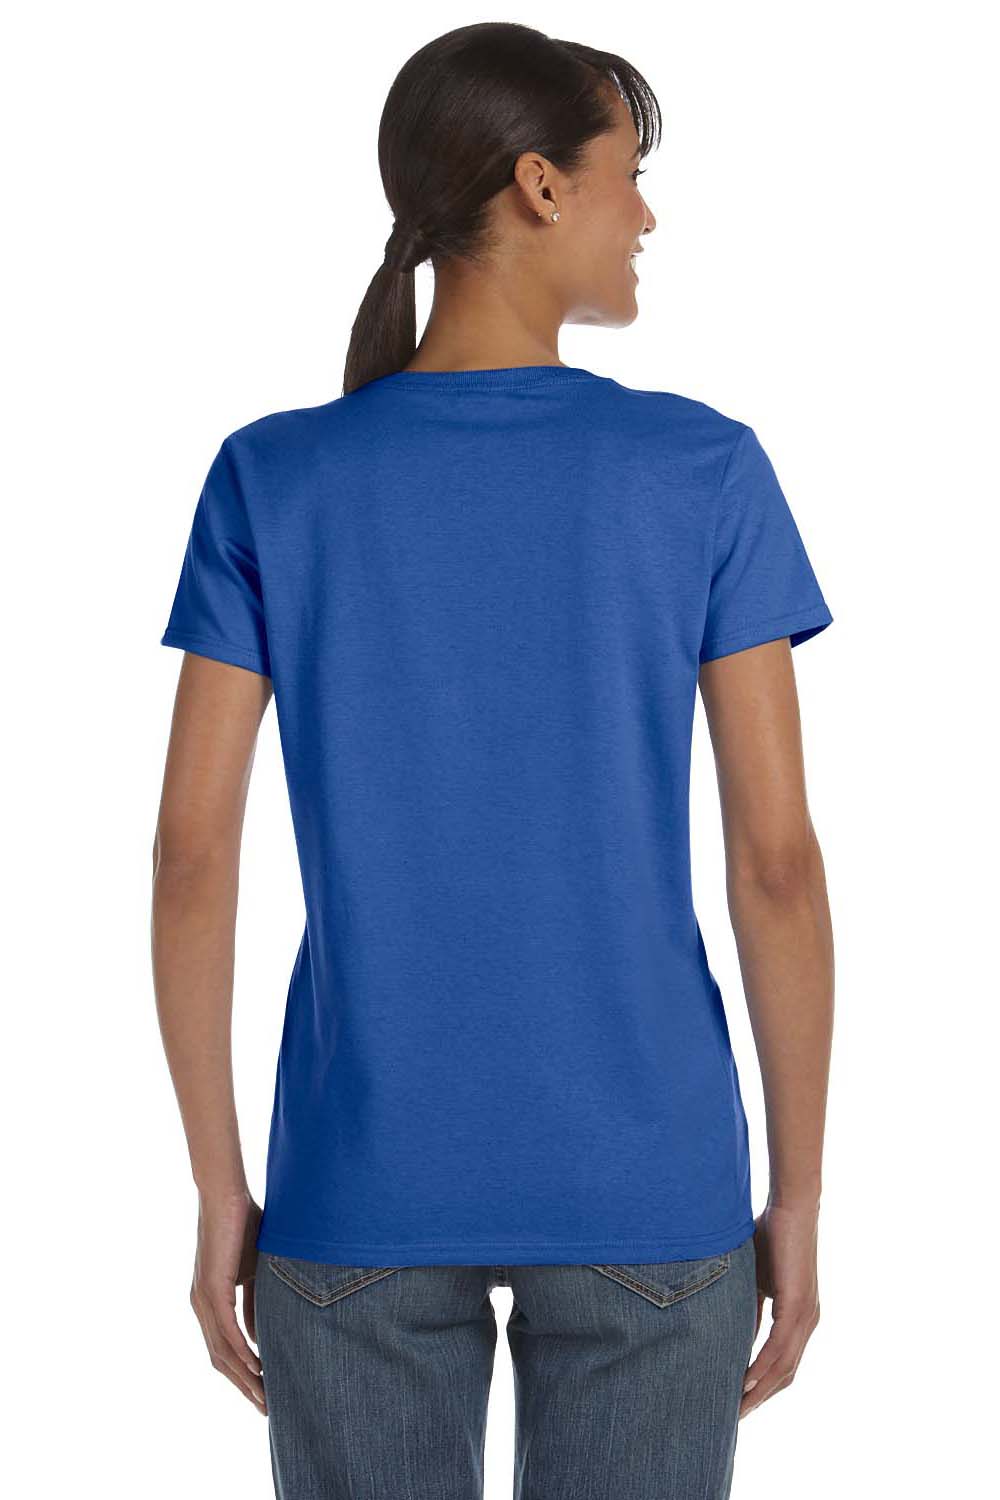 Gildan G500L Womens Short Sleeve Crewneck T-Shirt Royal Blue Back